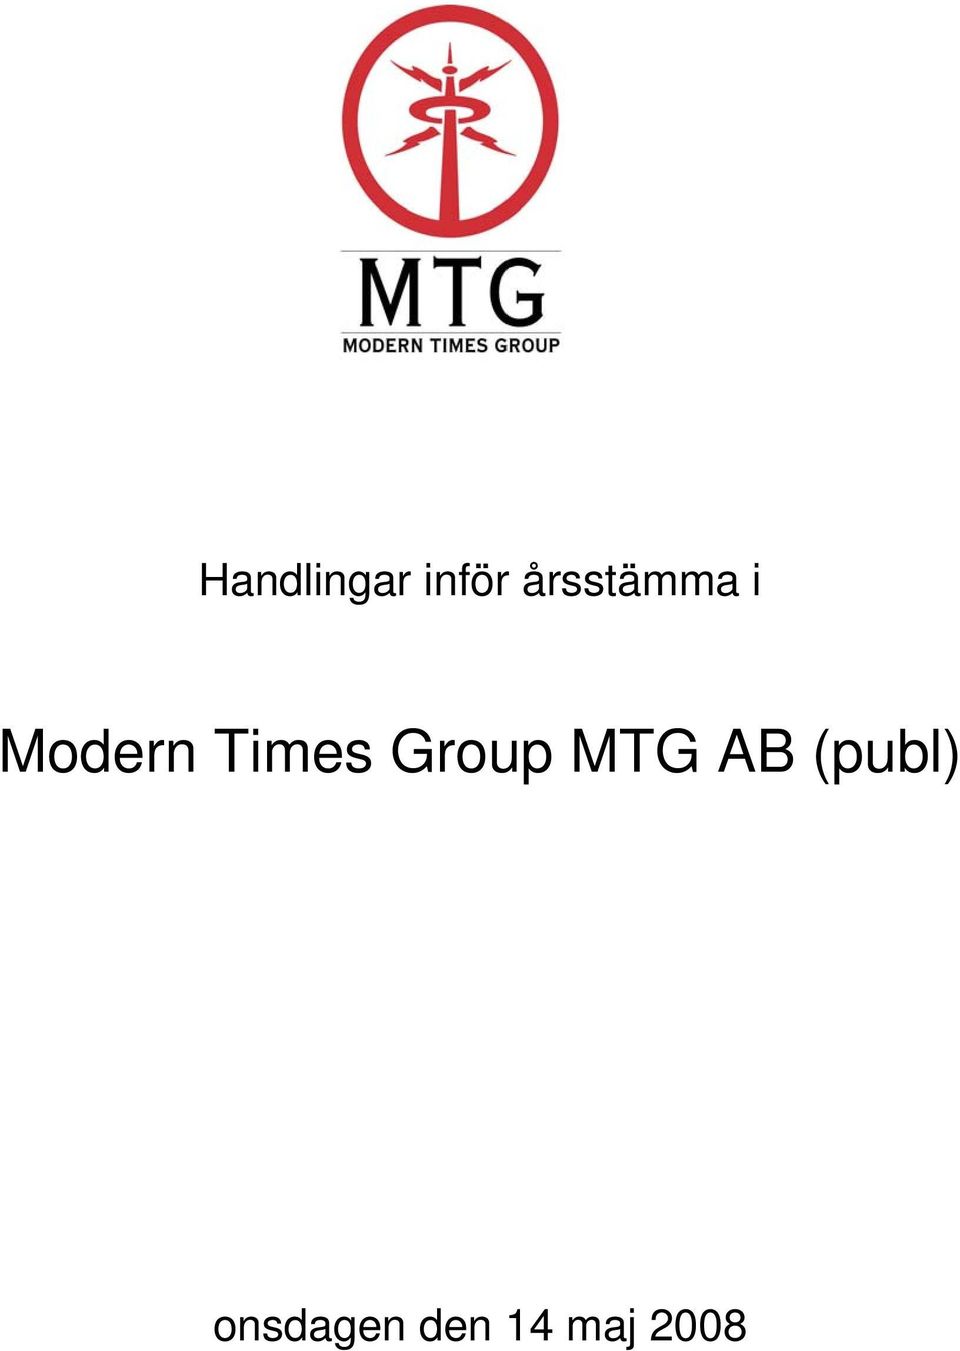 Times Group MTG AB